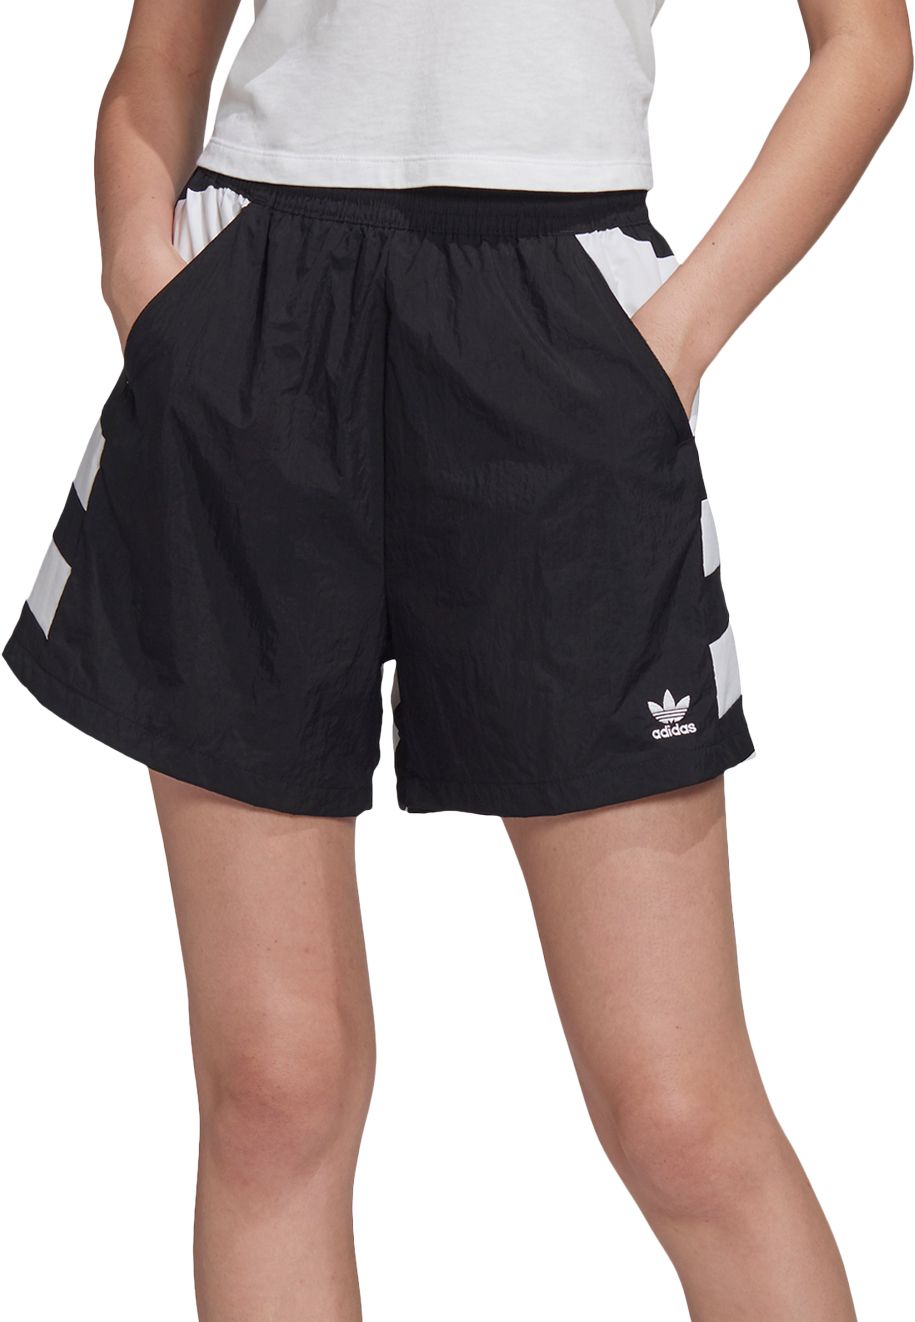 black and white adidas shorts womens